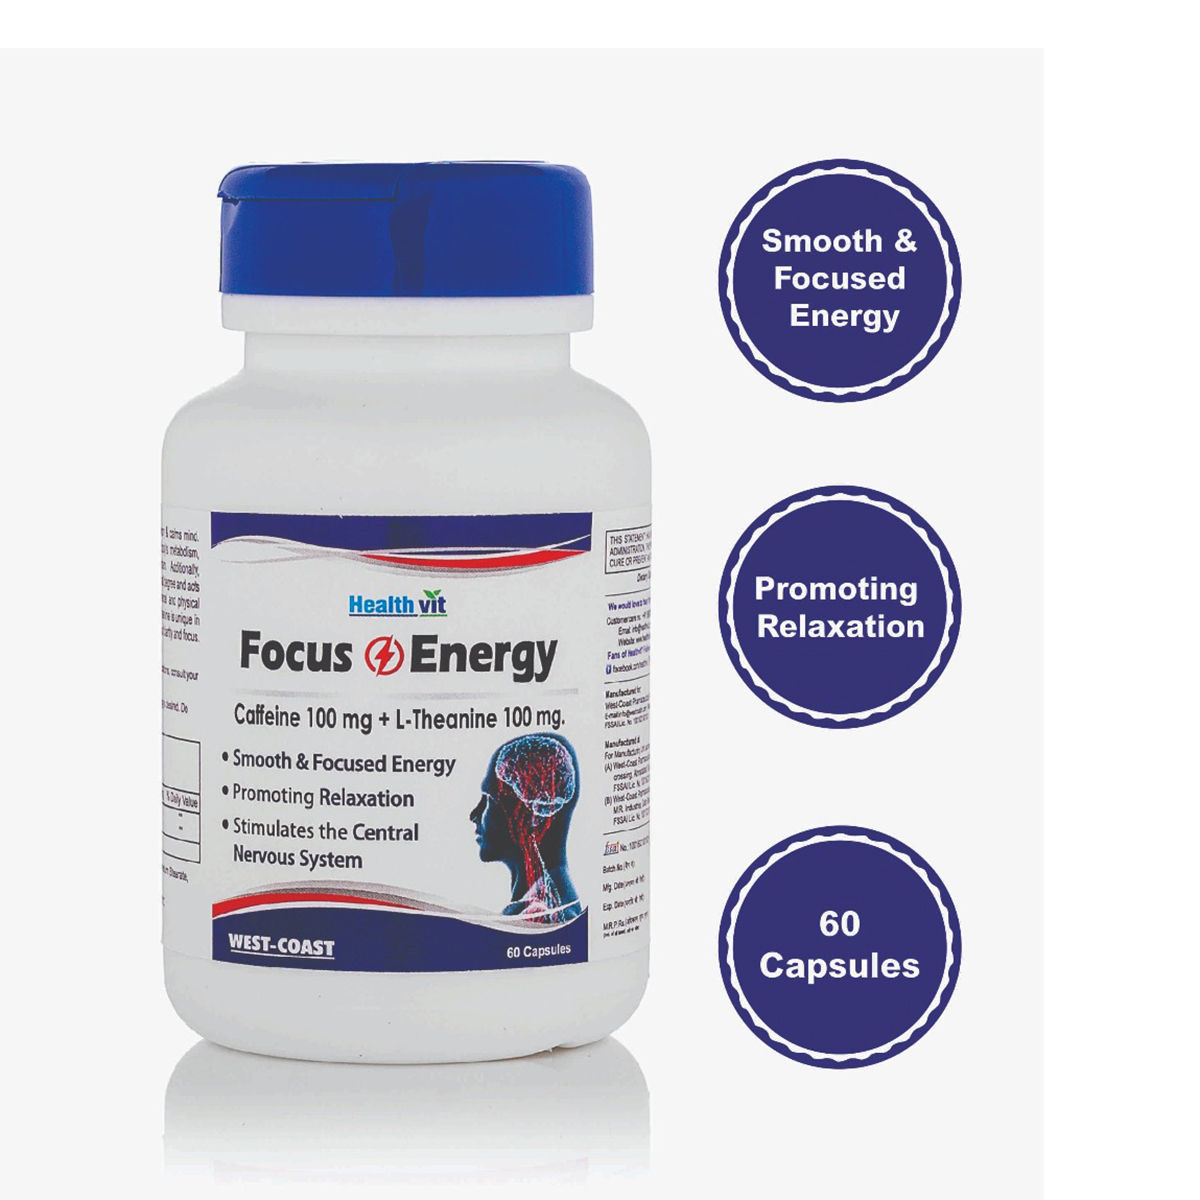 Buy Healthvit Focus & Energy Caffeine 100 mg L-Theanine 100 mg, 60 Capsules Online